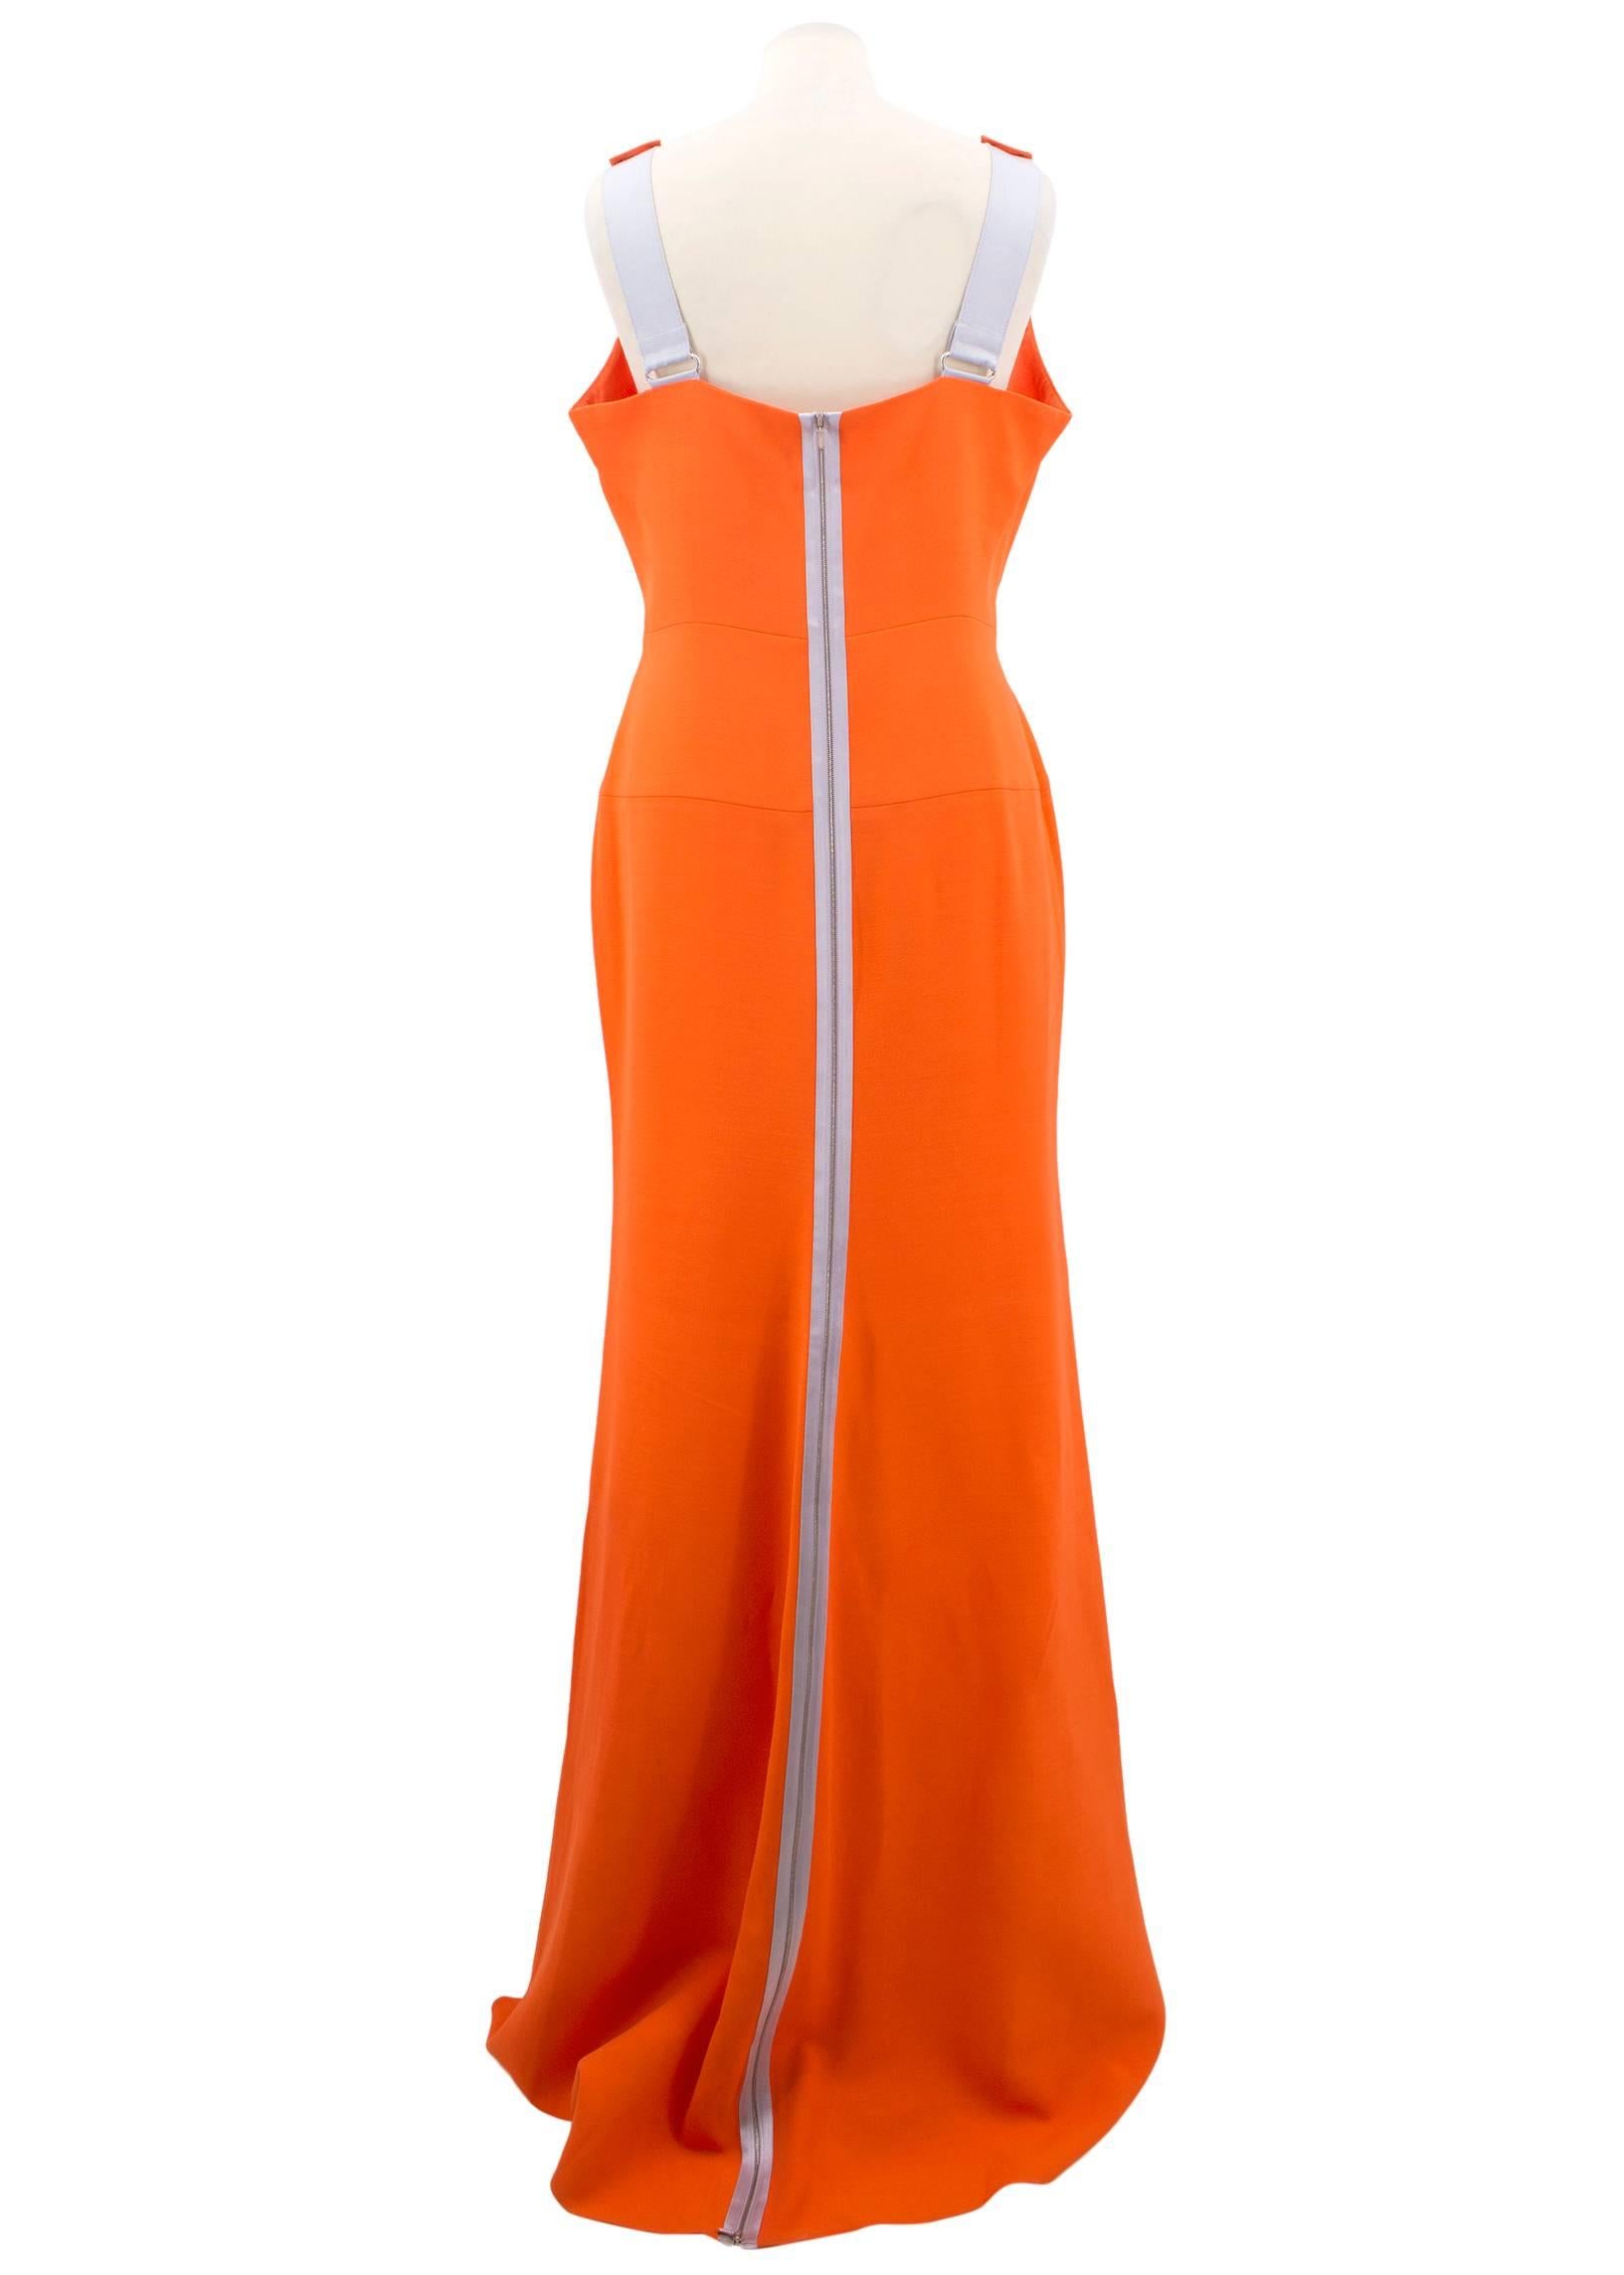 Victoria Beckham Tangerine Scoop Neck Gown (Size: US 10/L)  For Sale 4